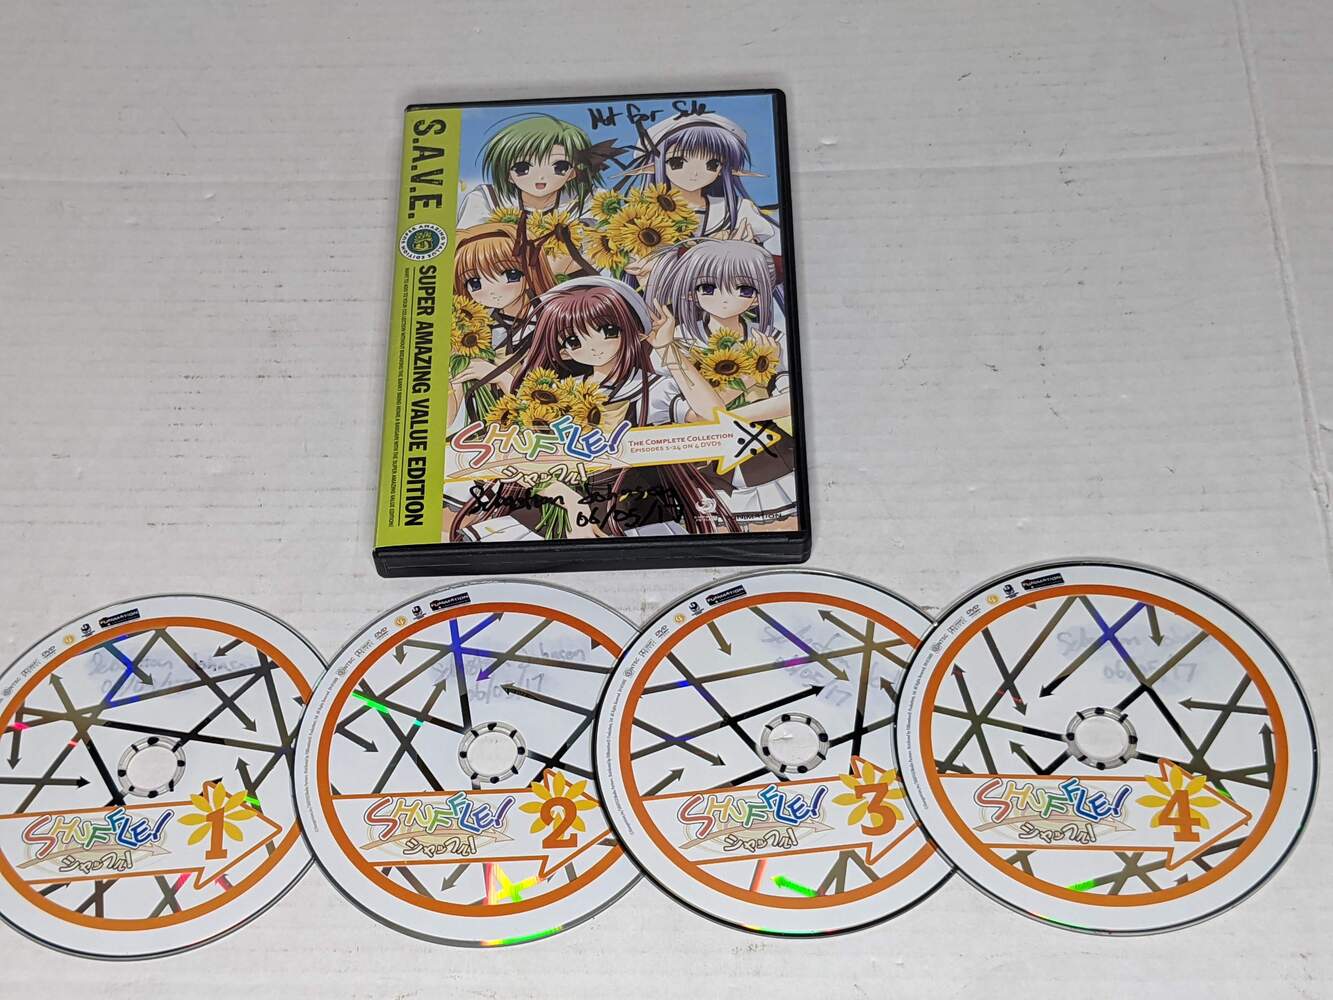 Shuffle - The Complete Collection (DVD, 2011, 4-Disc Set) S.A.V.E. Anime